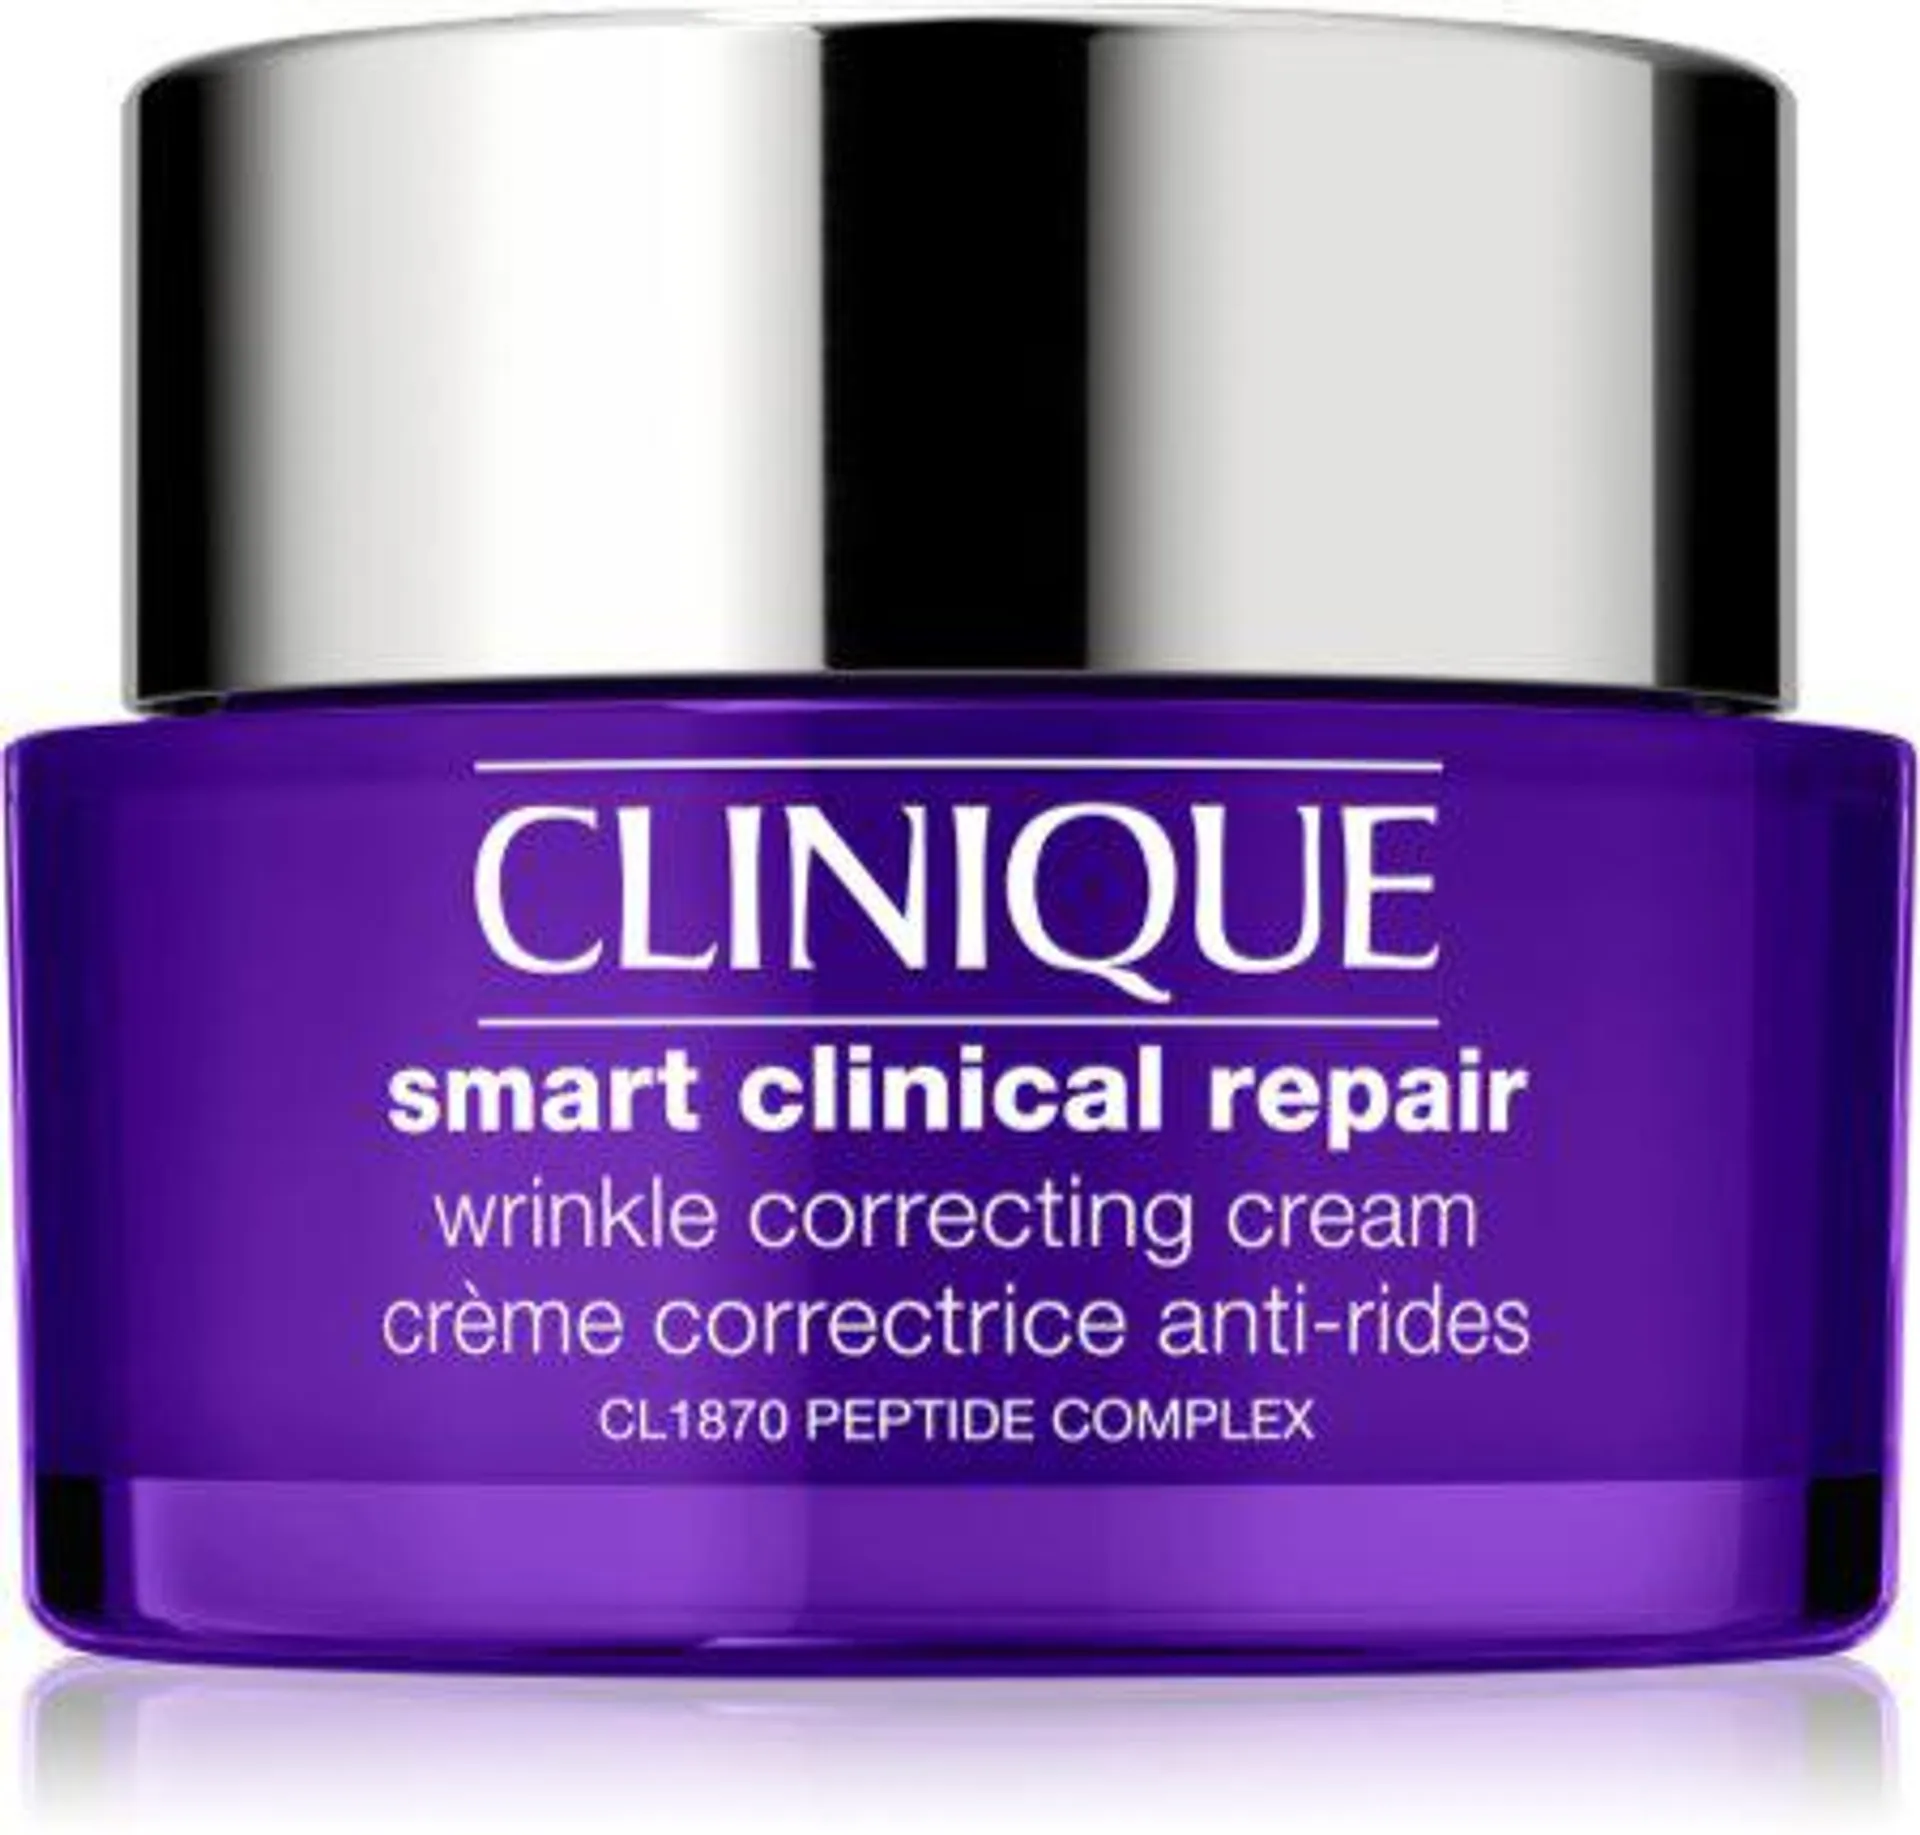 Smart Clinical™ Repair Wrinkle Correcting Cream